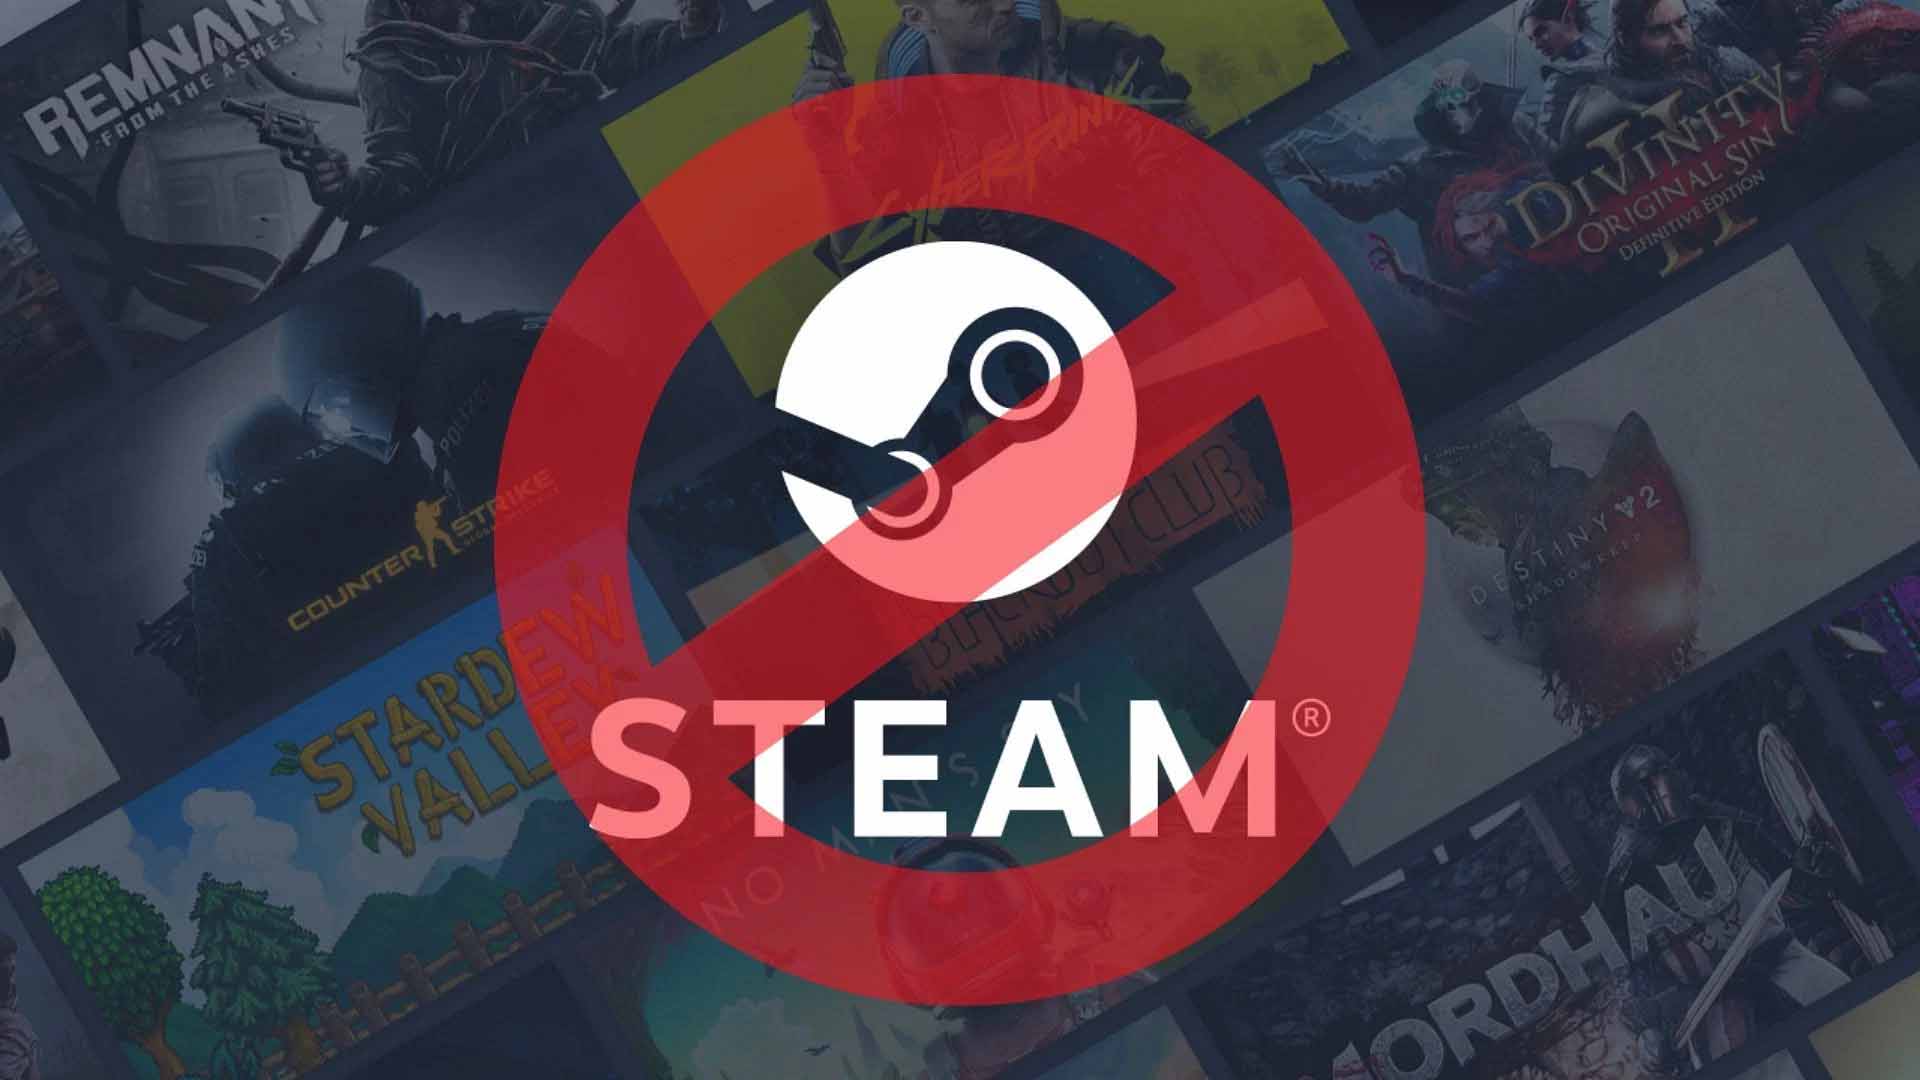 Steam Vietnam'da yasaklandı